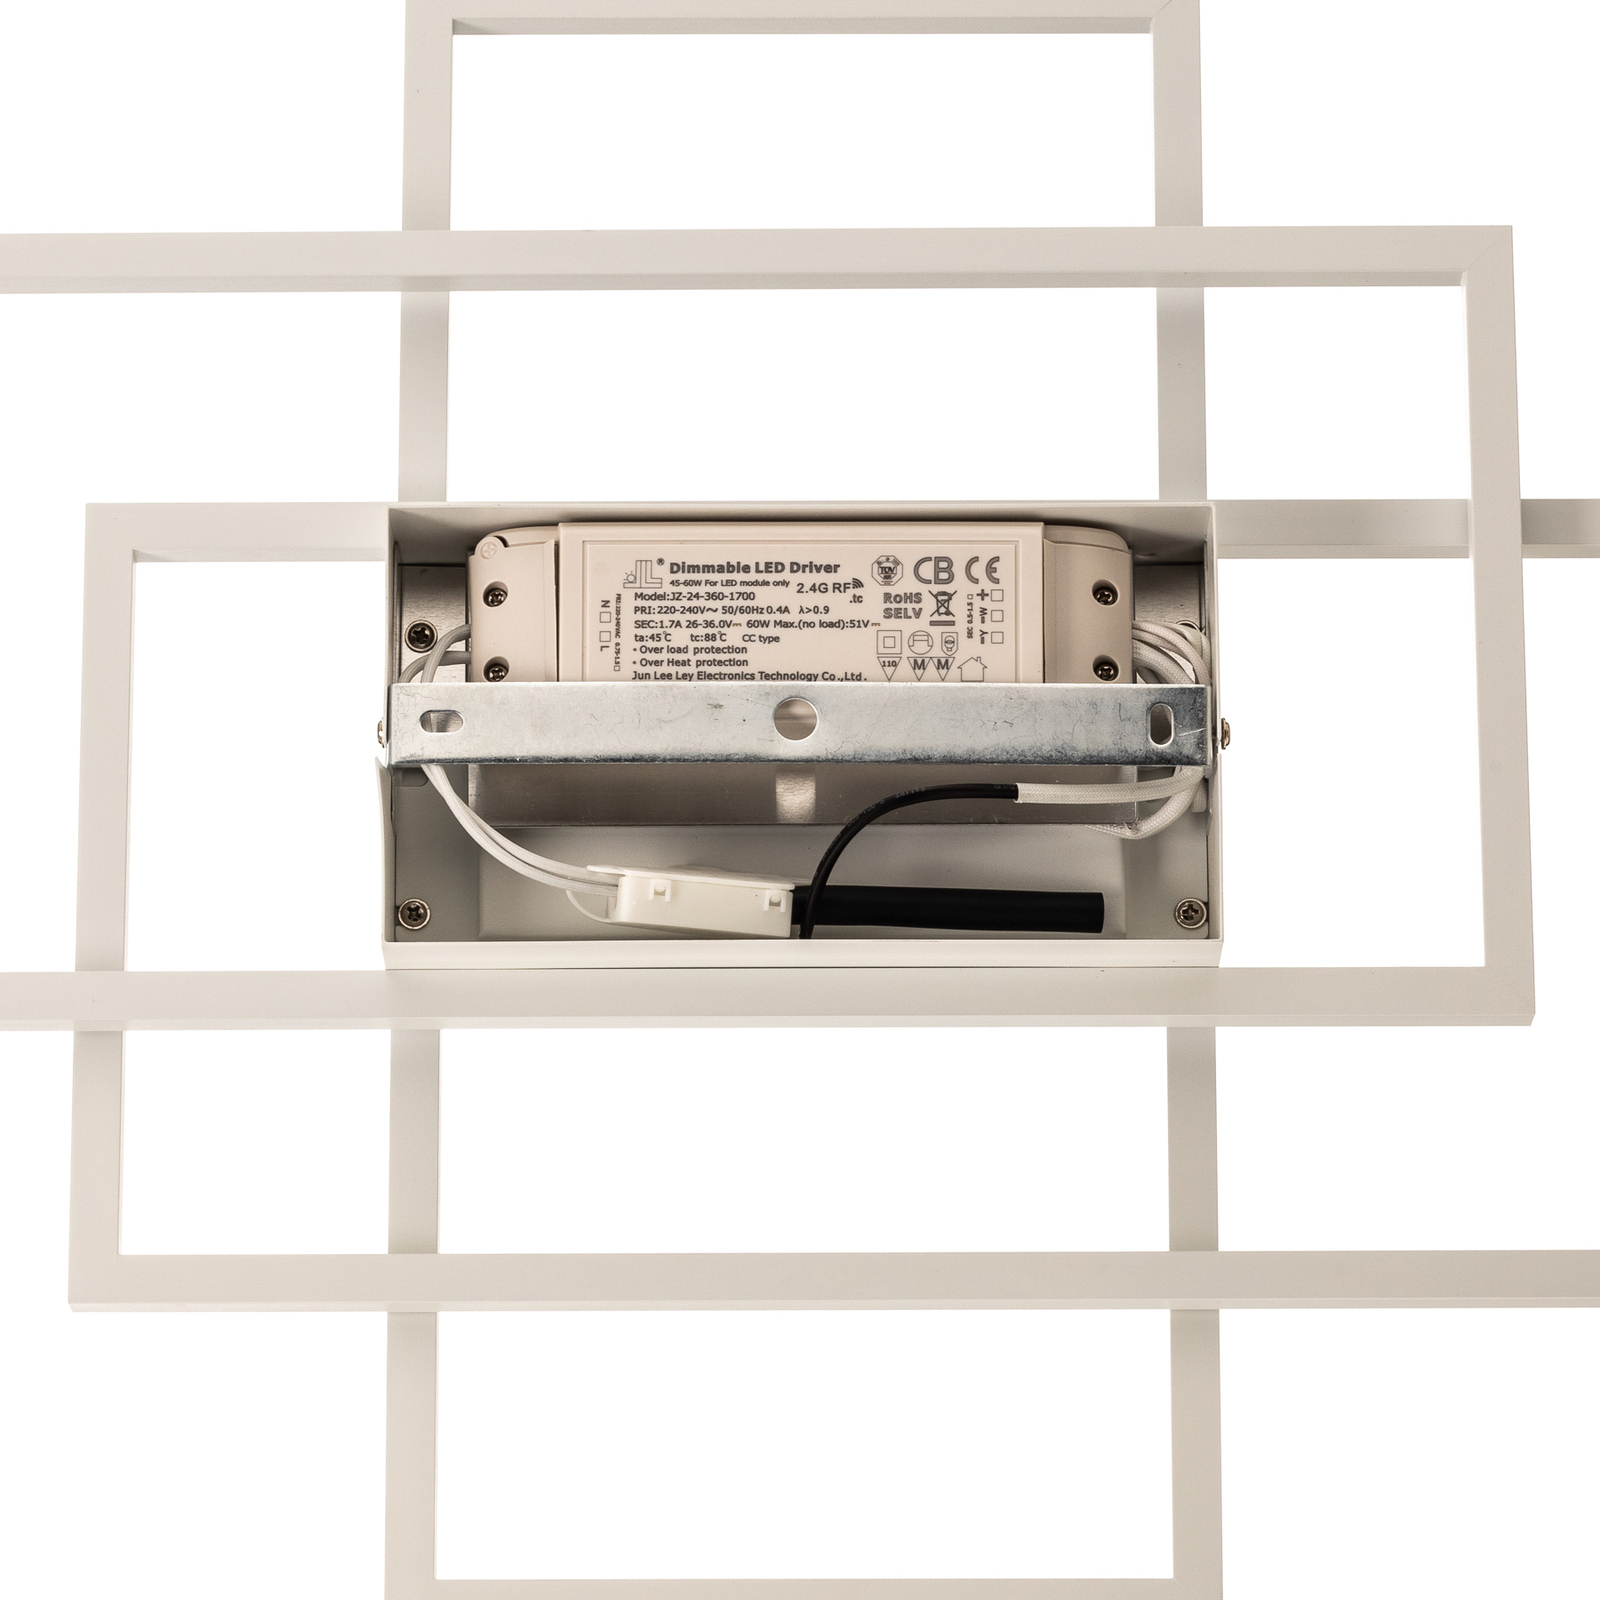 Lindby Ismera plafón LED 3 marco, blanco